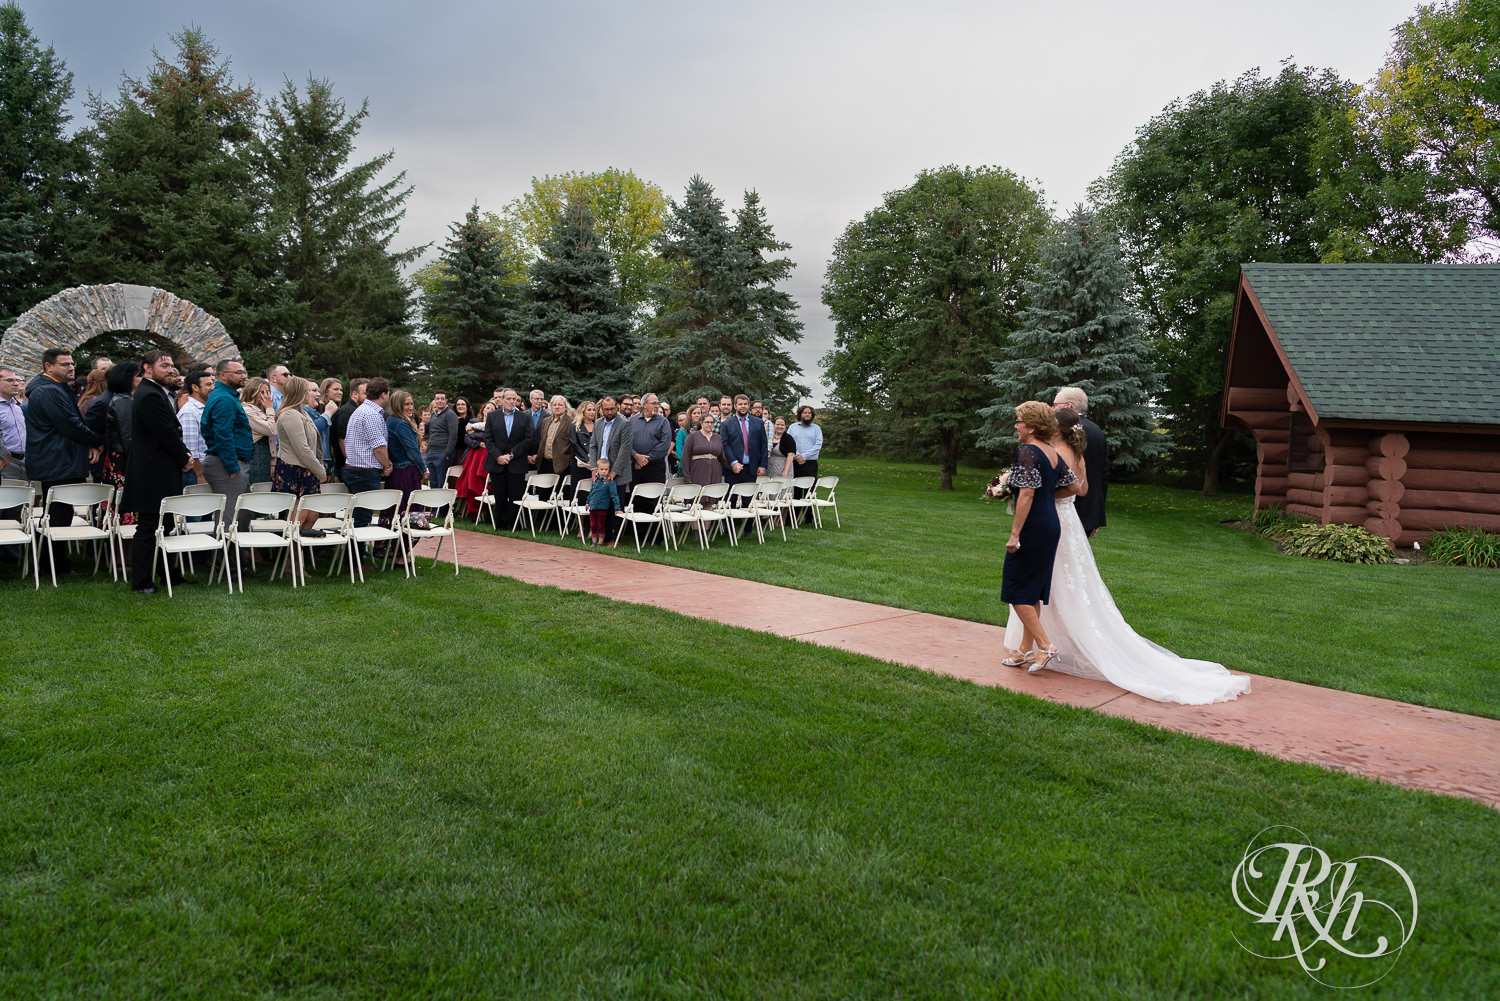 Wedding ceremony on rainy day at Glenhaven Events in Farmington, Minnesota.